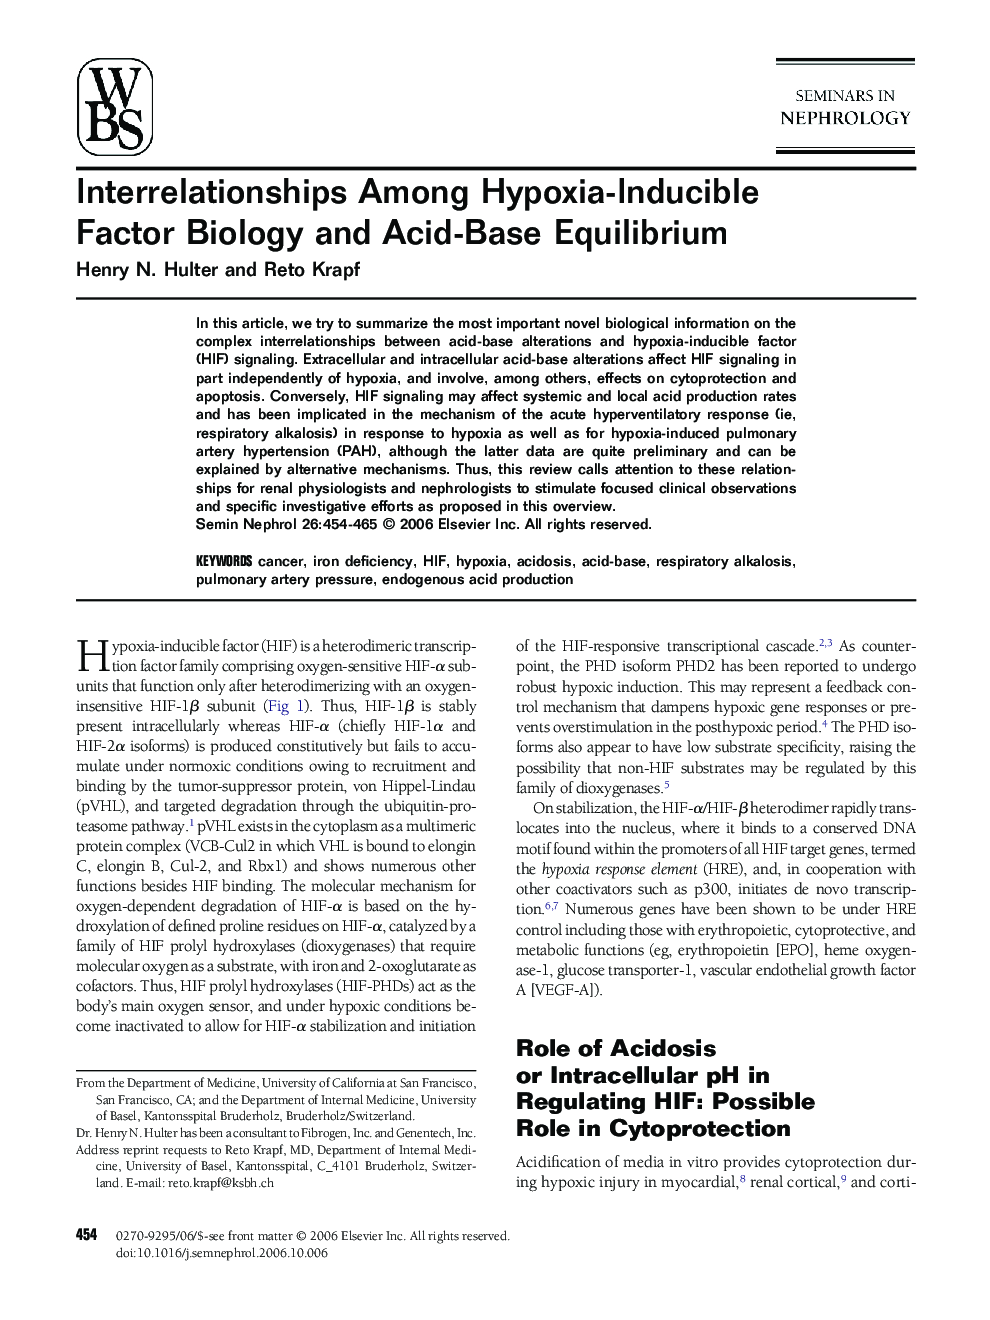 Interrelationships Among Hypoxia-Inducible Factor Biology and Acid-Base Equilibrium